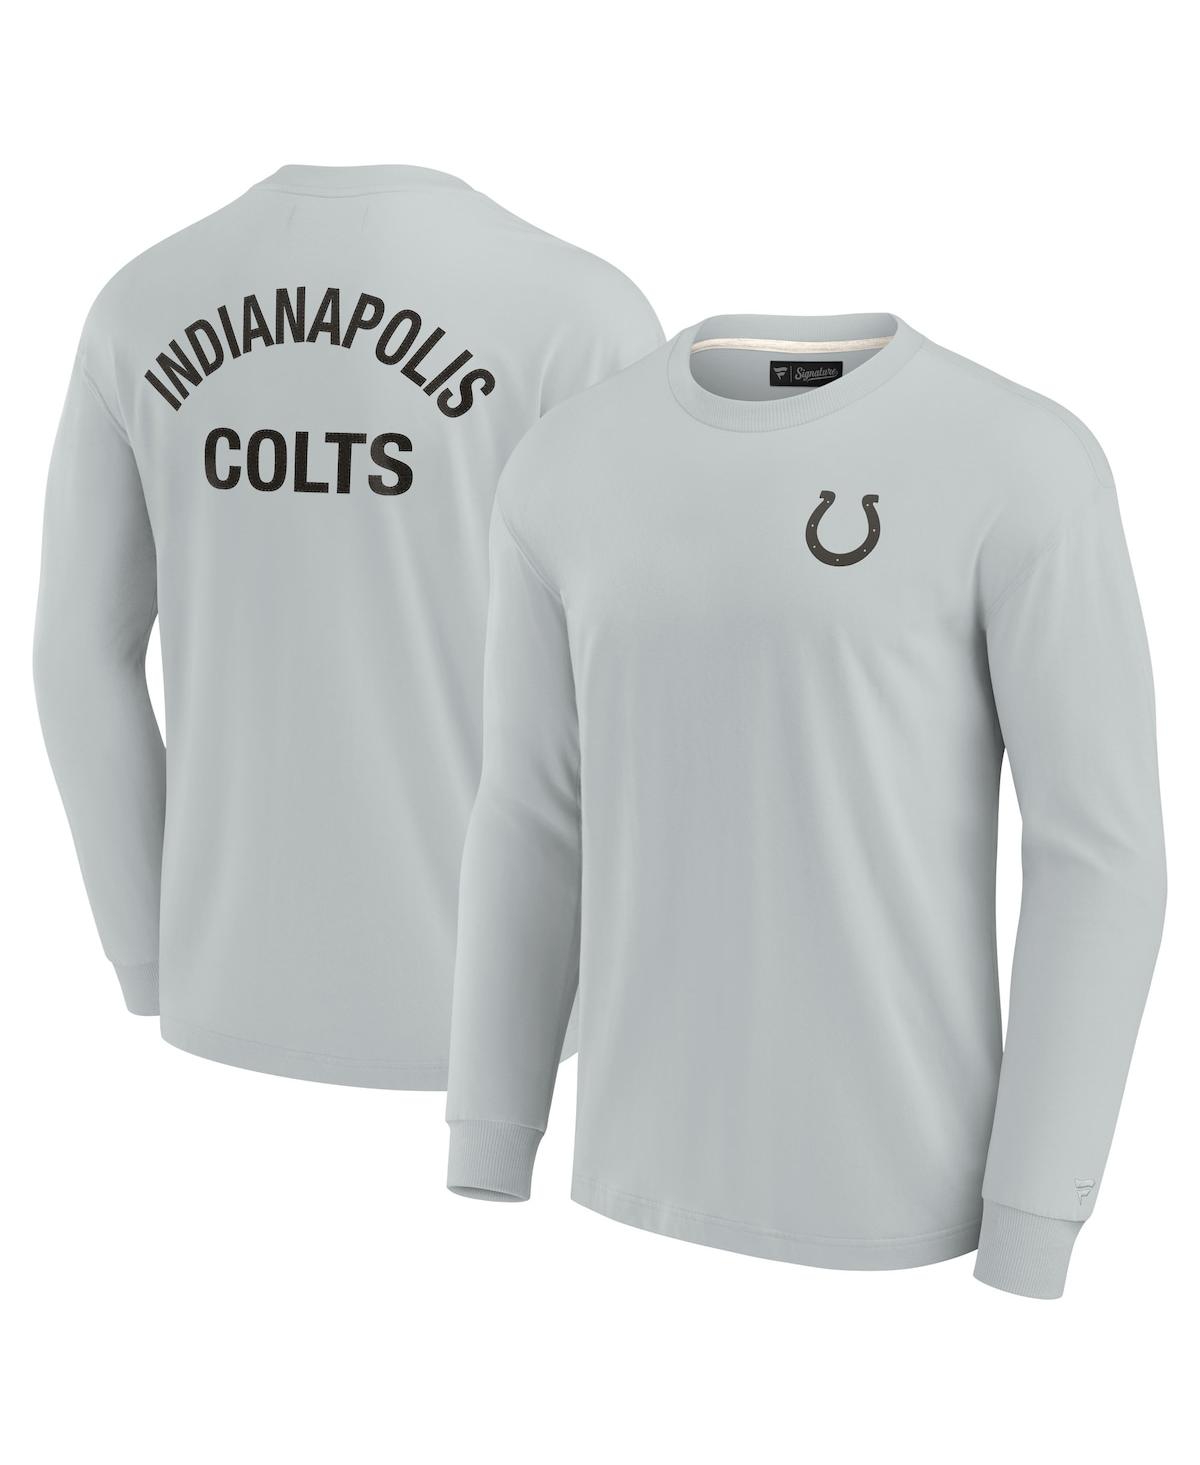 Men's and Women's Fanatics Signature Gray Indianapolis Colts Super Soft Long Sleeve T-shirt - Gray